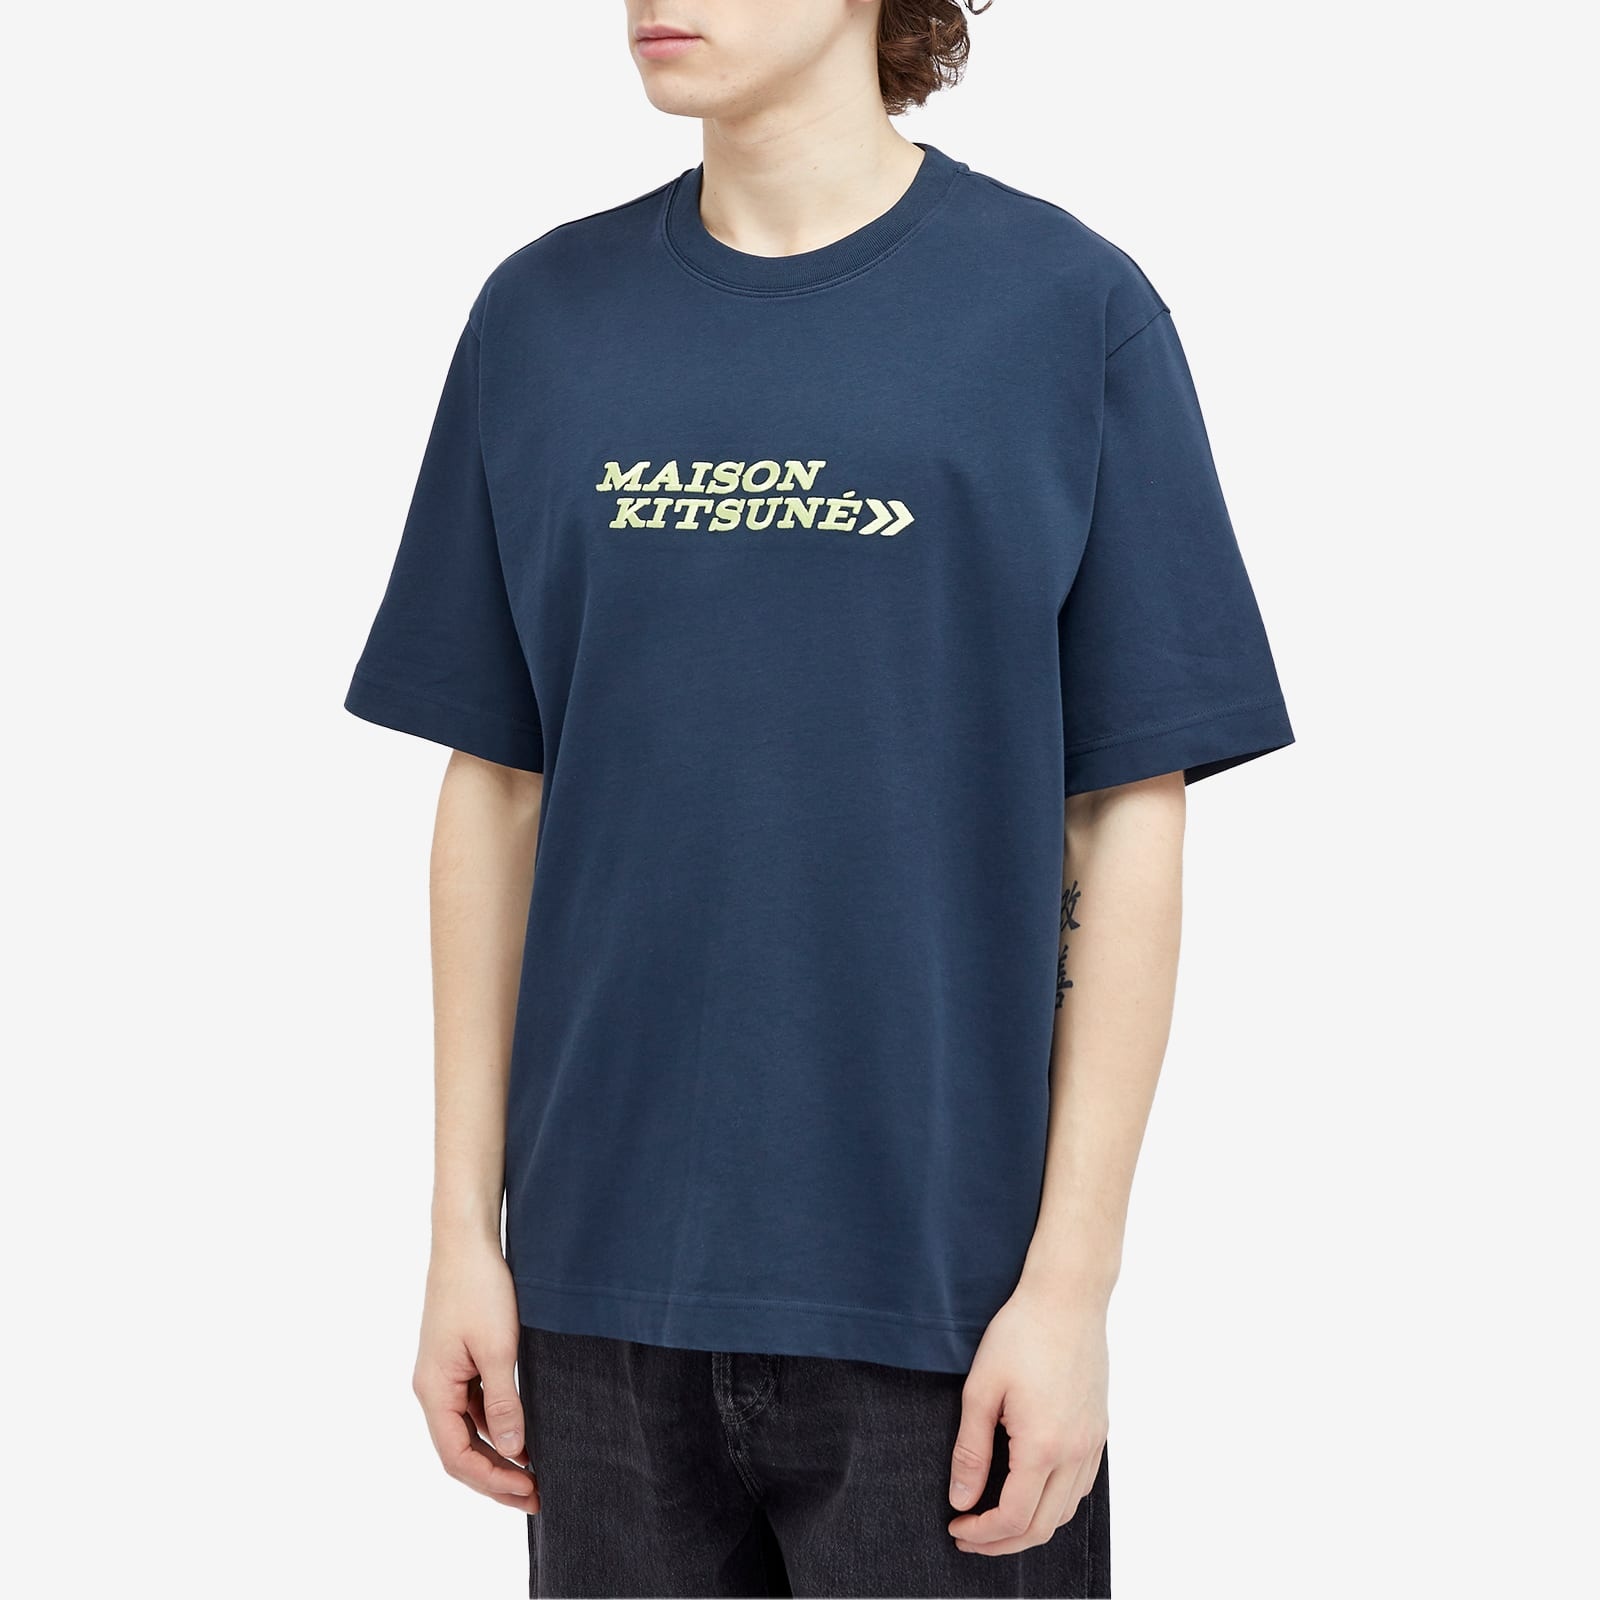 Maison Kitsuné Go Faster T-Shirt - 2